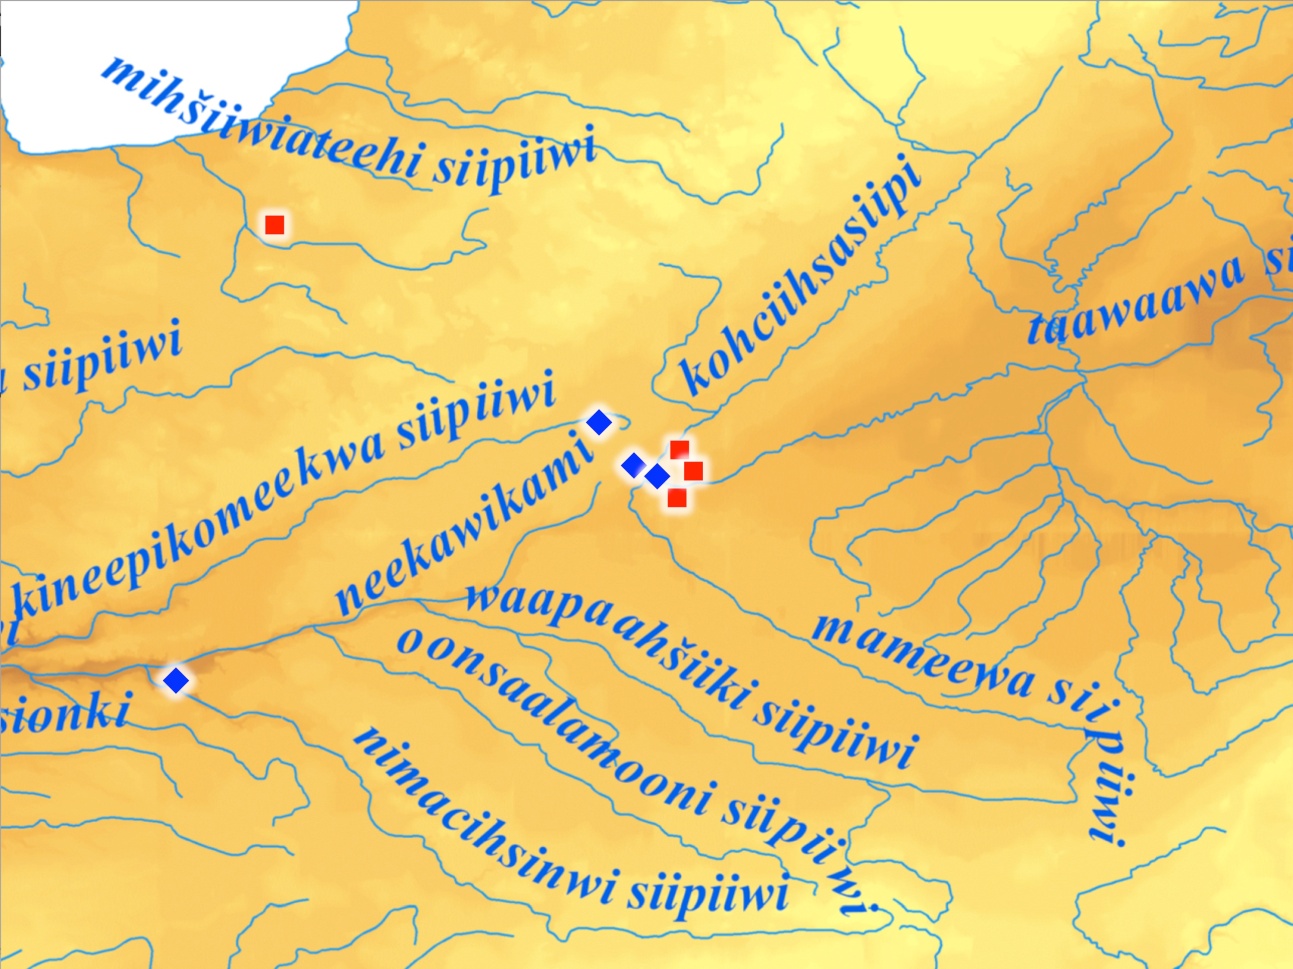 Image 2 (Kiihkayonki area)